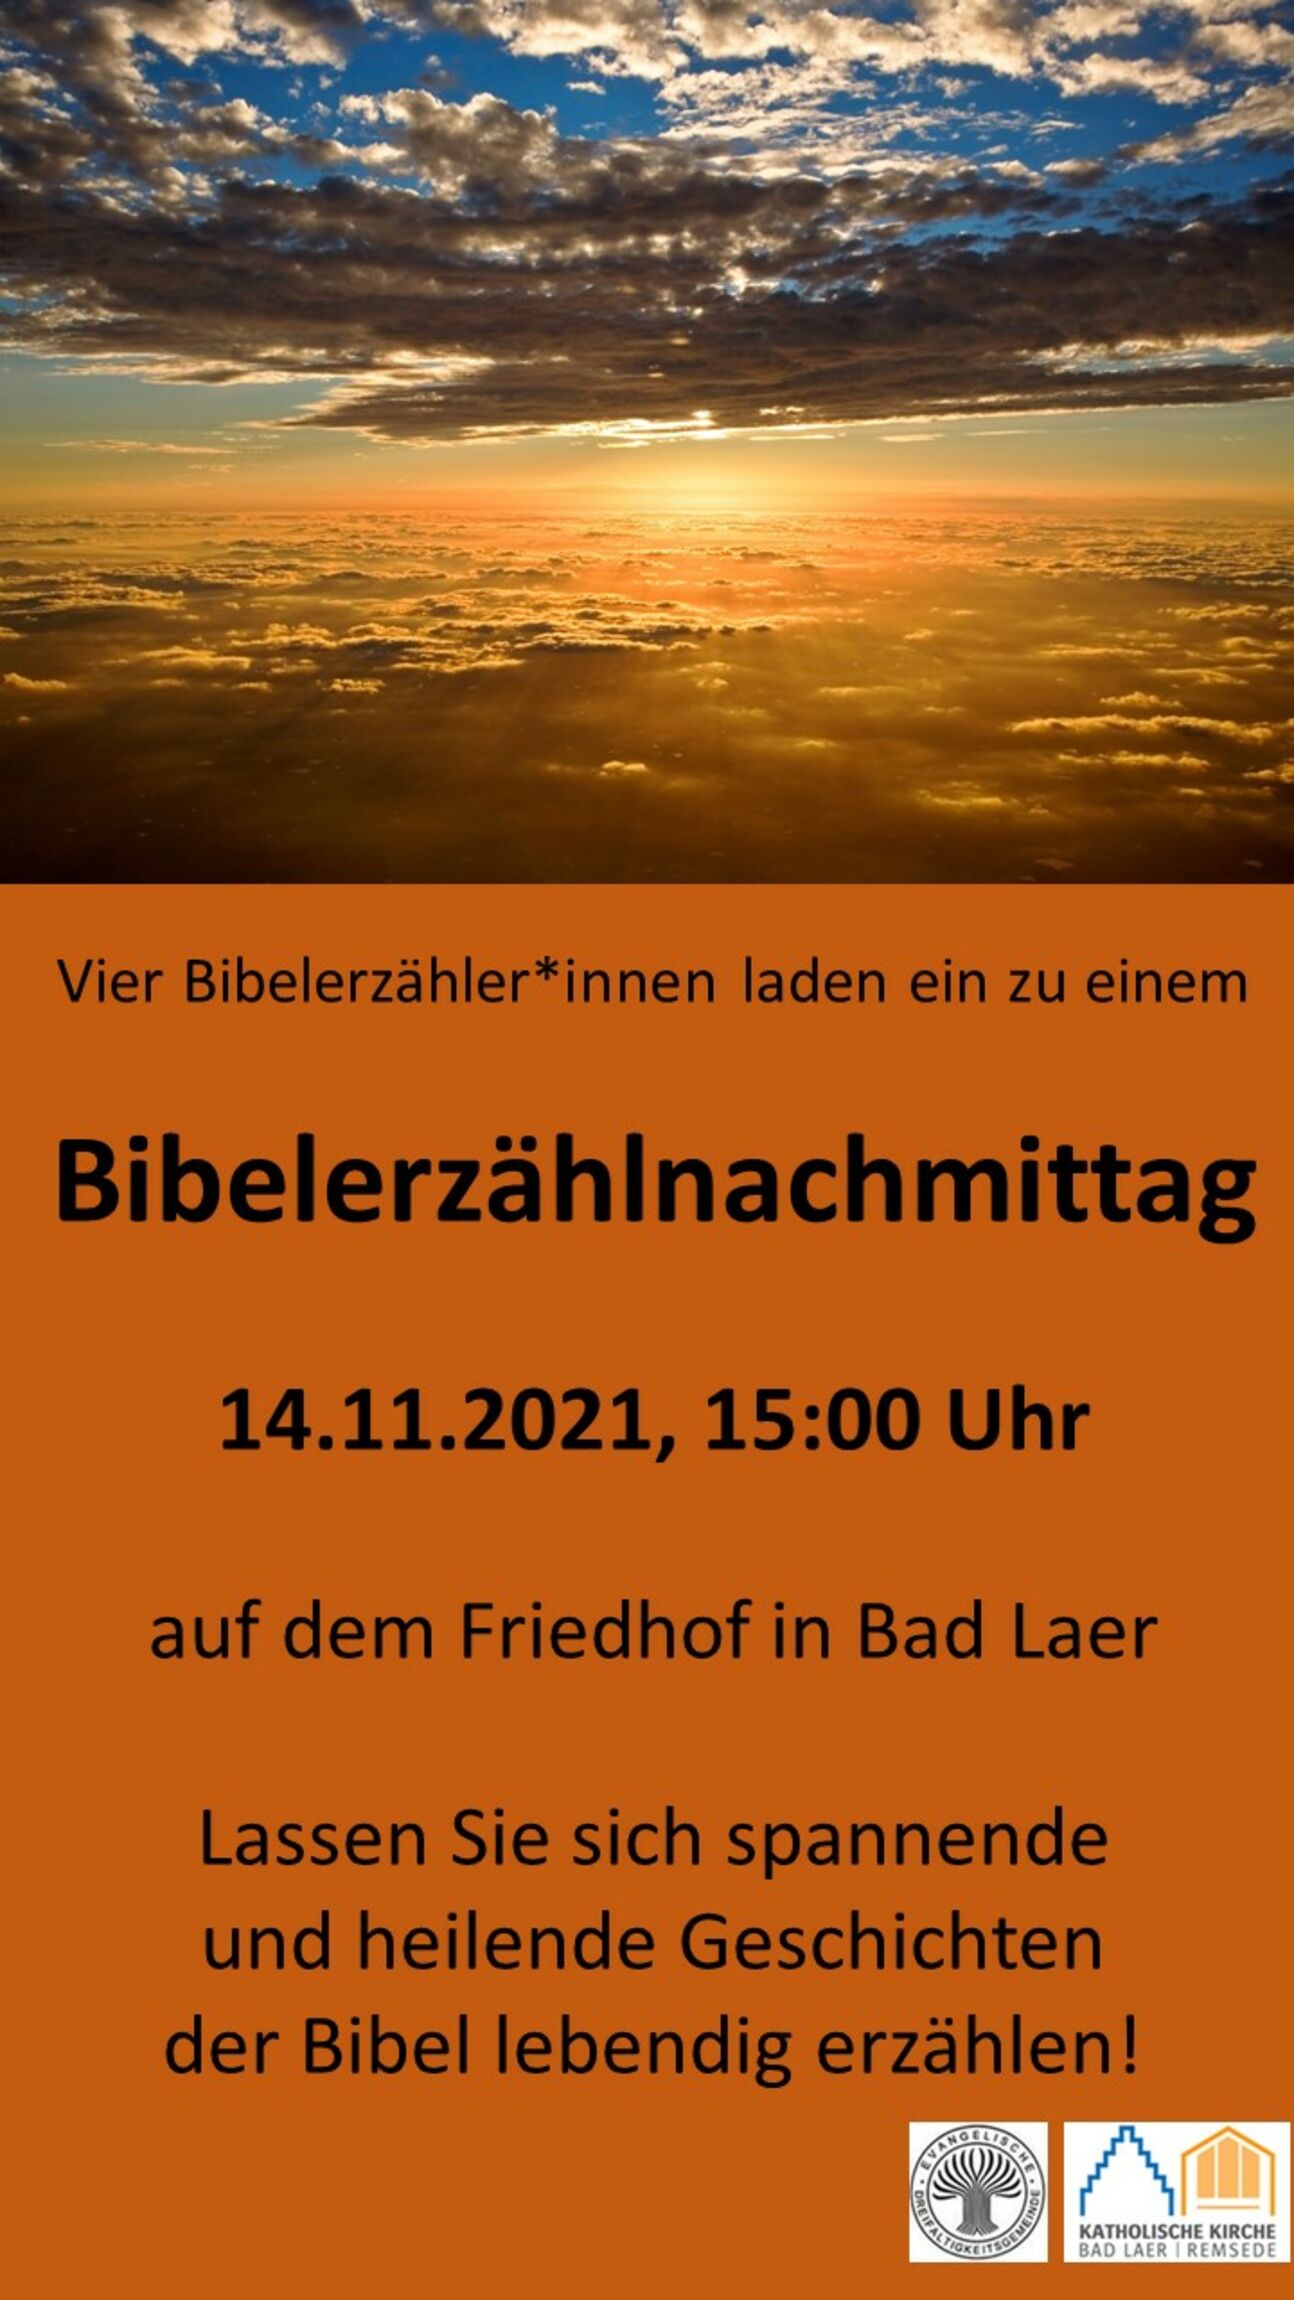 Bibelerzählnachmittag in Bad Laer